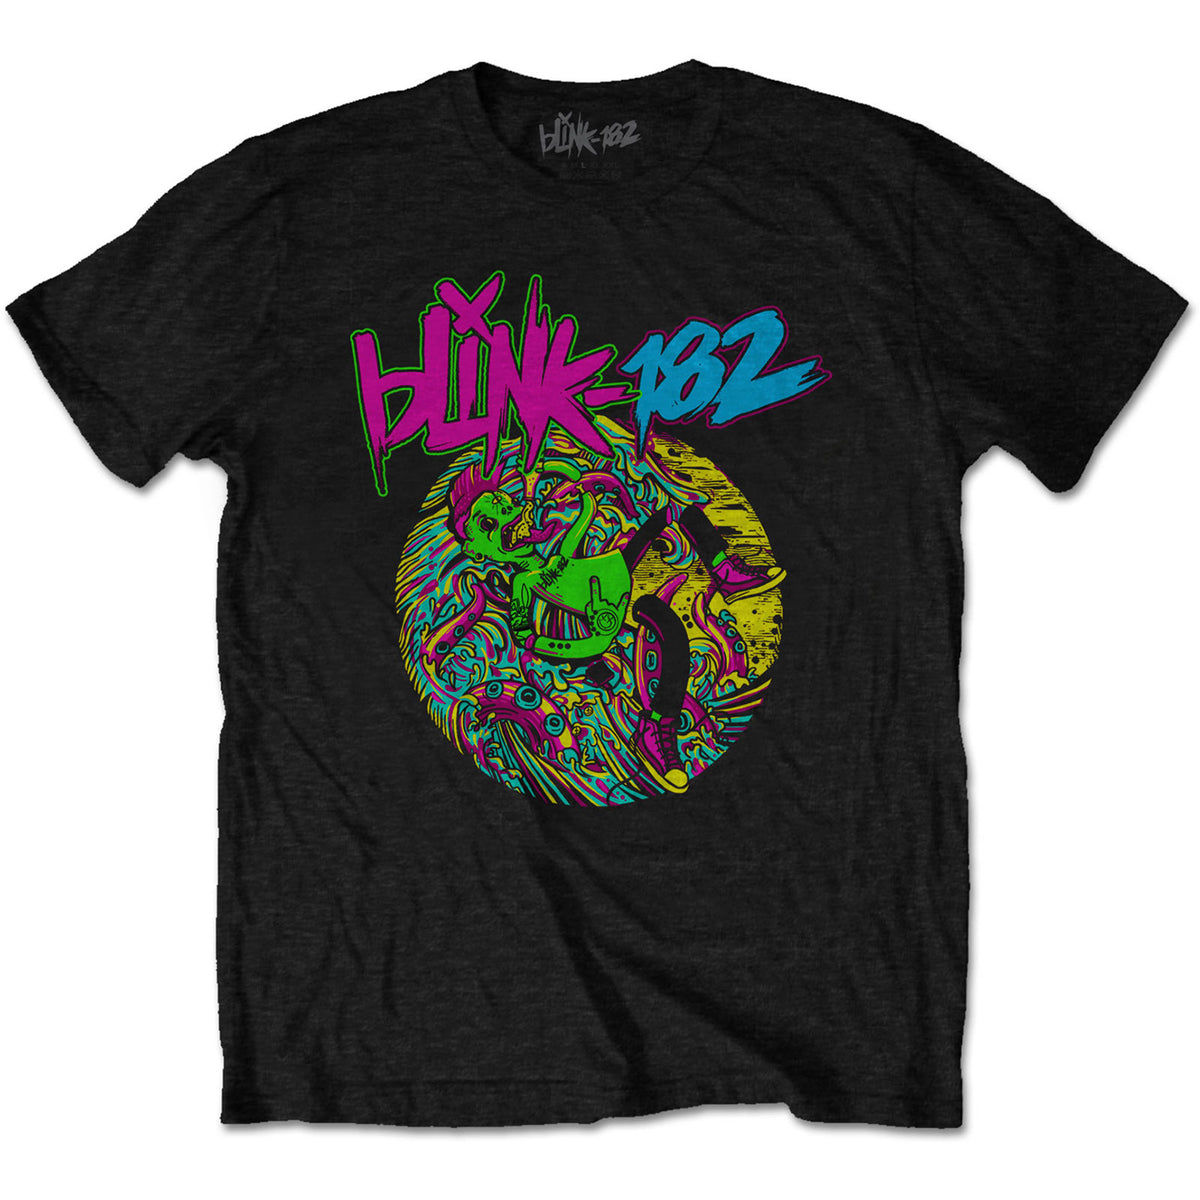 Blink 182 Overboard Event Tee